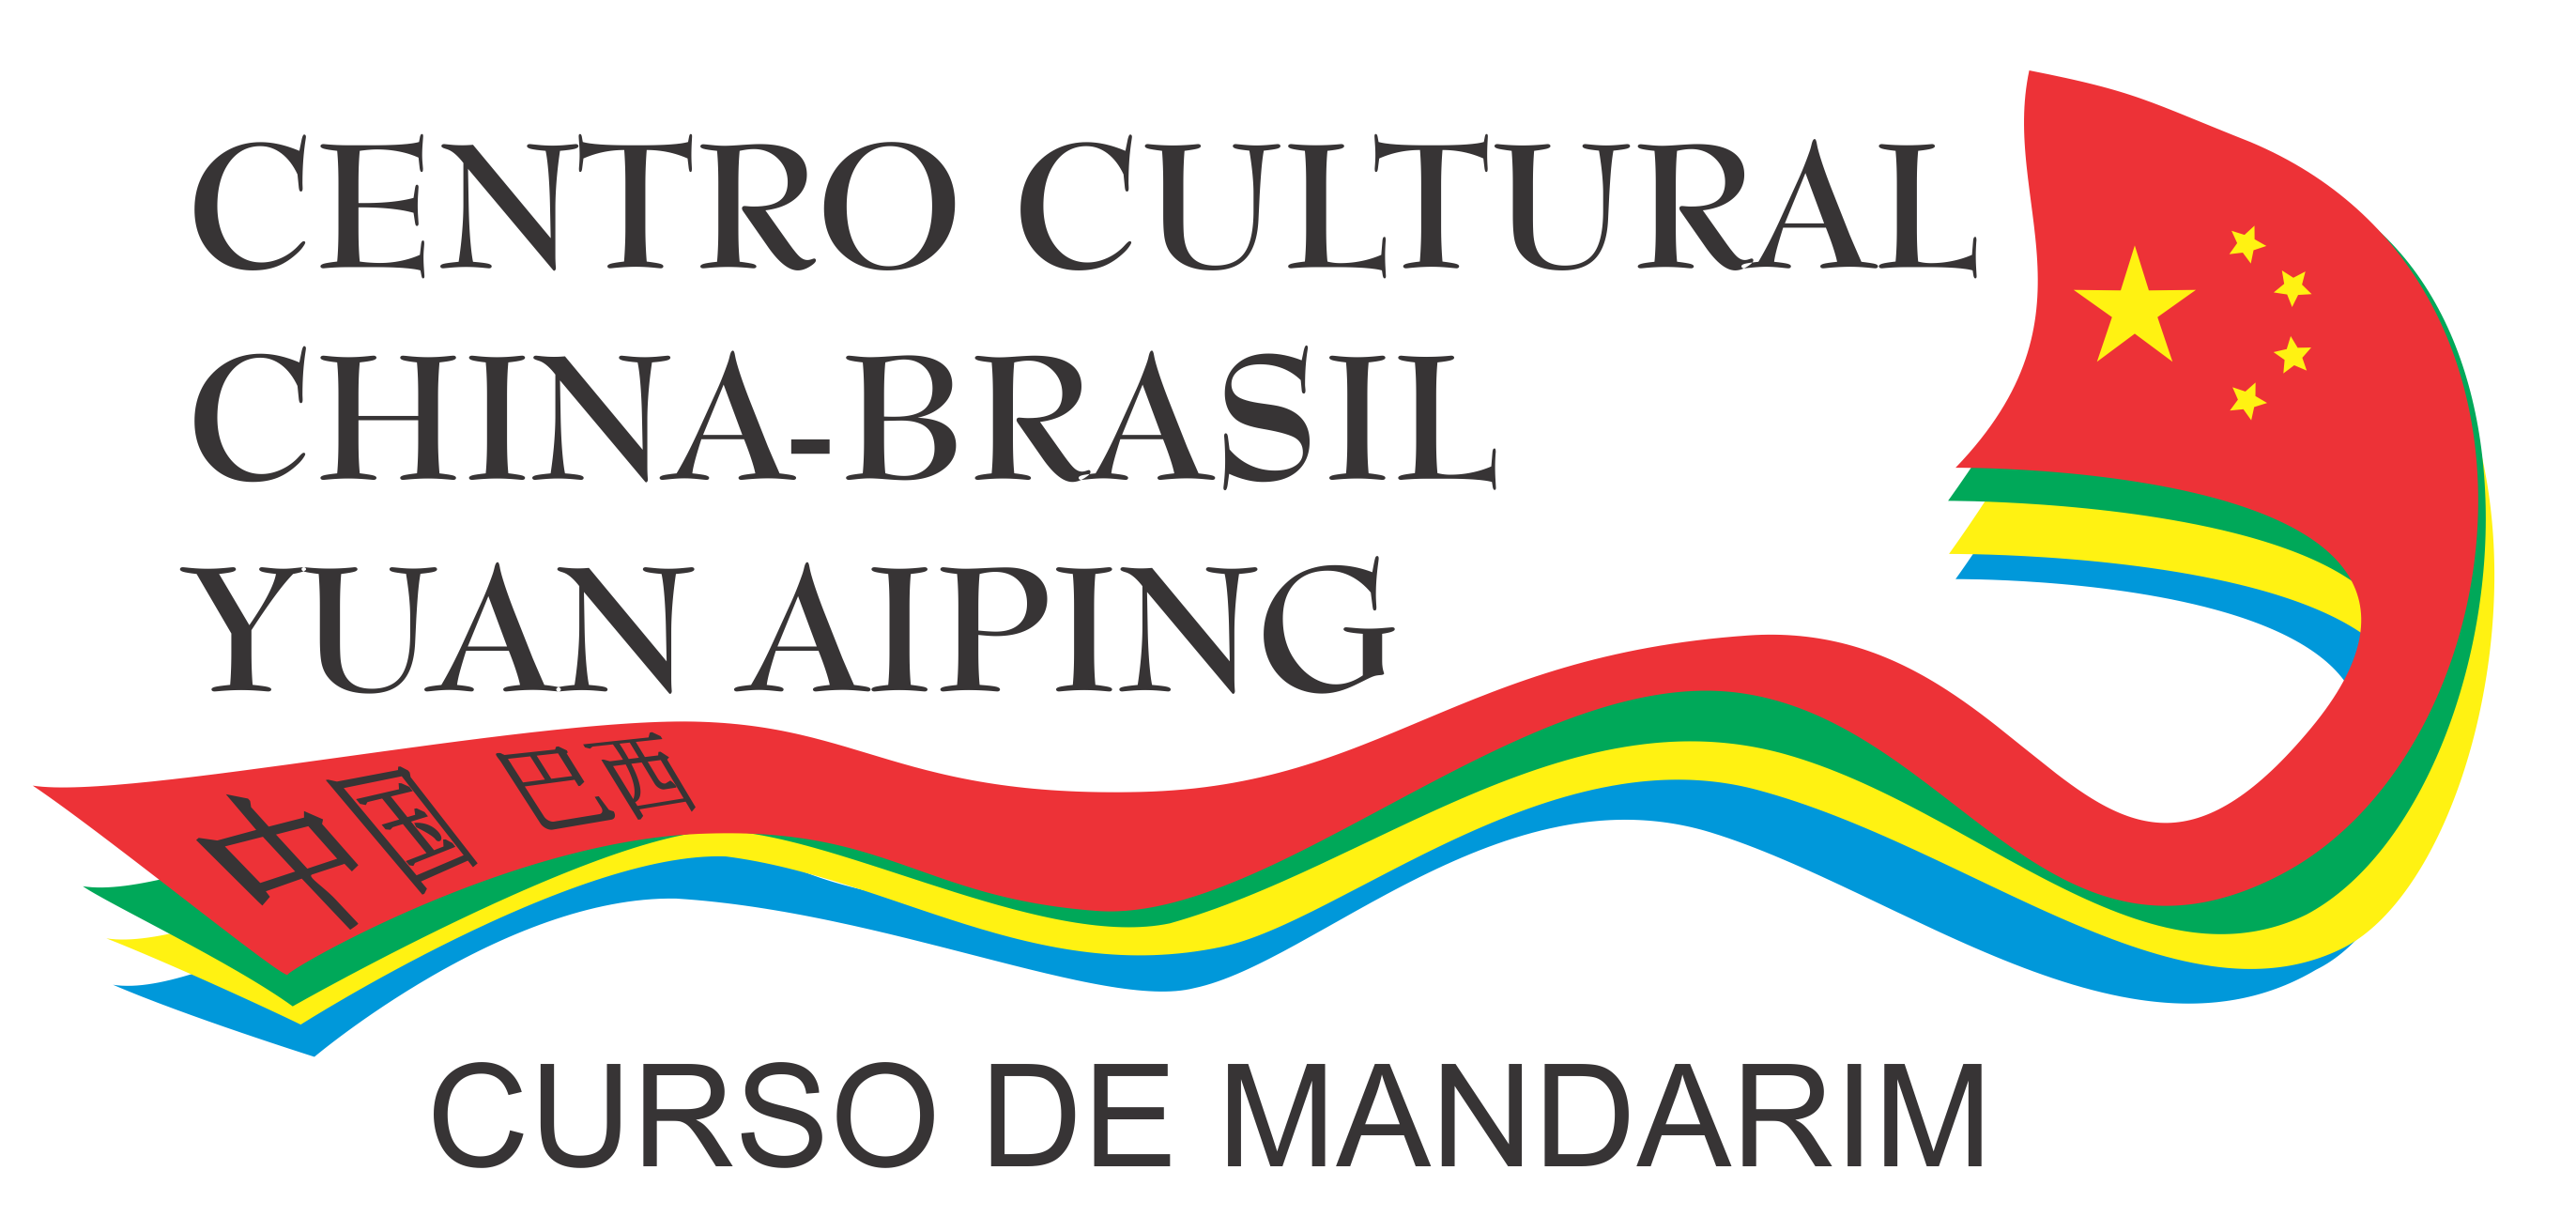 Curso de Mandarim Centro Cultural China-Brasil Yuan Aiping